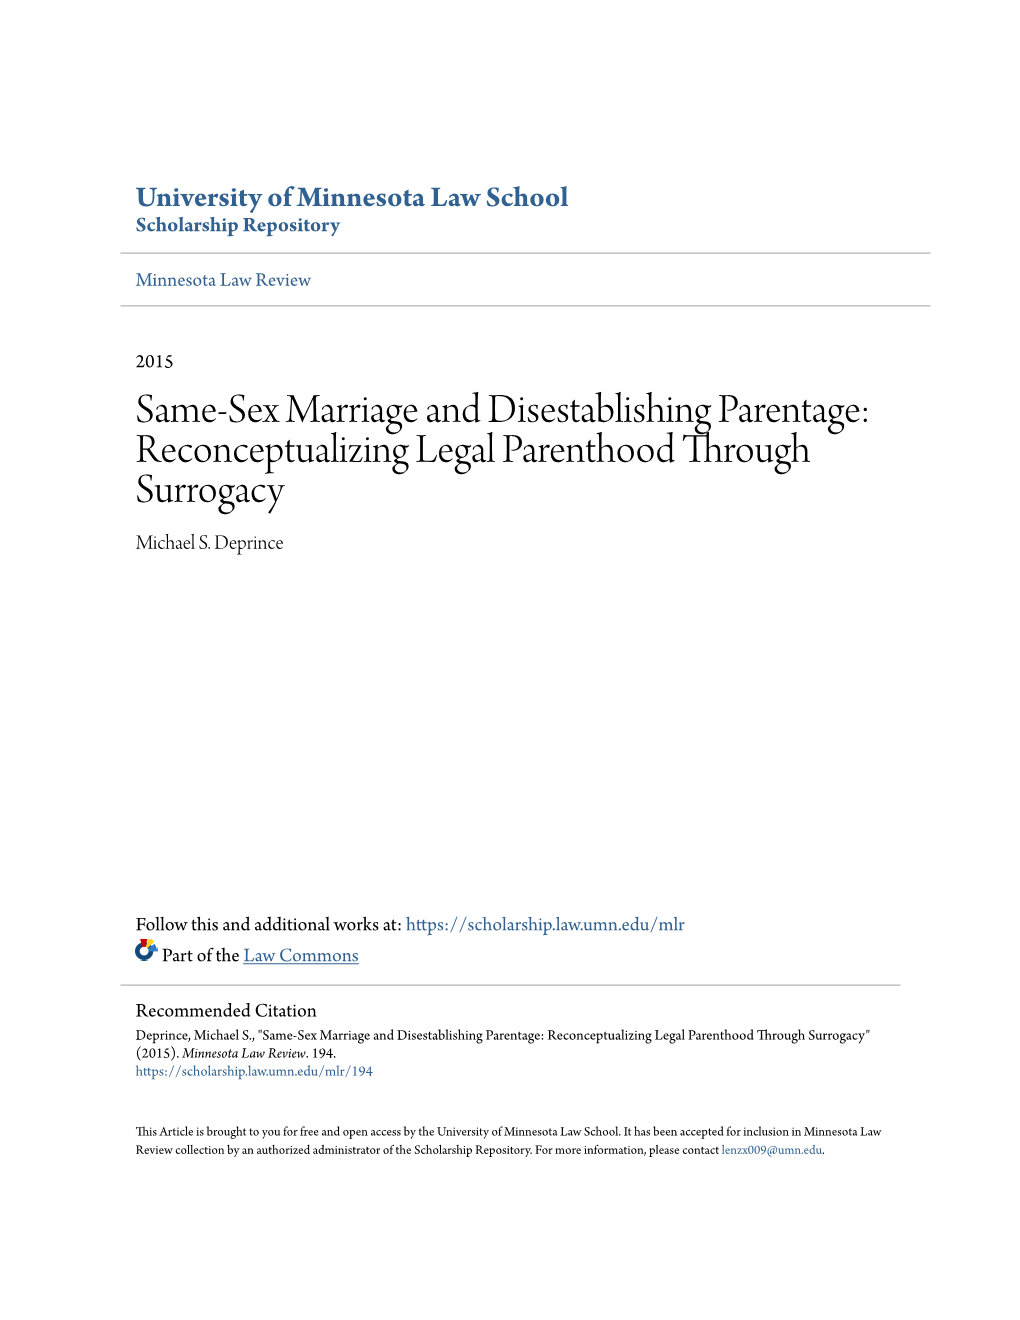 Same-Sex Marriage and Disestablishing Parentage: Reconceptualizing Legal Parenthood Through Surrogacy Michael S